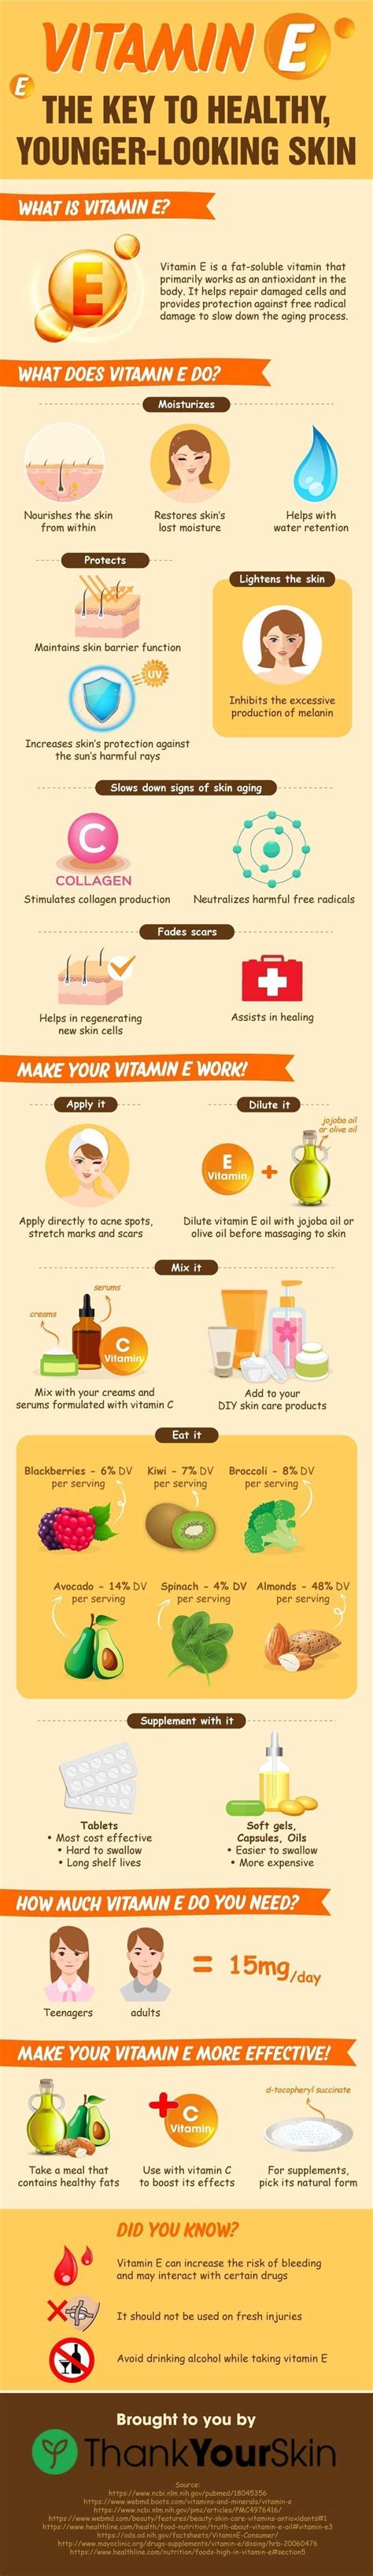 Vitamin e supplements help reduce inflammation & improve skin health. Benefits of Vitamin E Oil, Capsules, Cream for Skin, - For ...